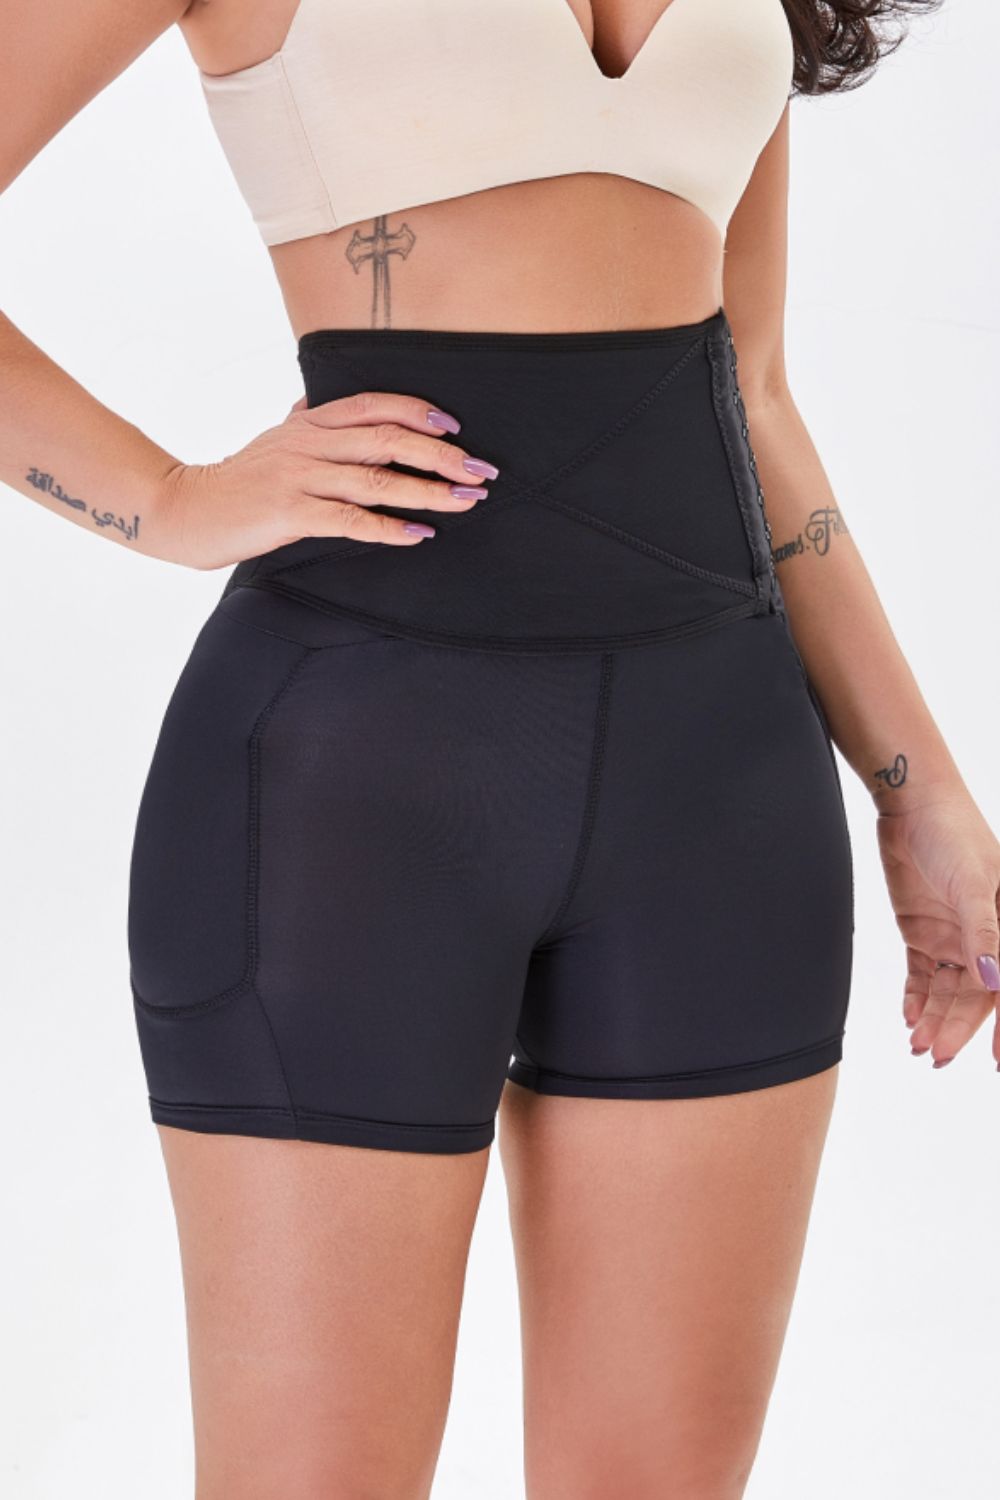 Full Size Hip Lifting Shaping Shorts - DromedarShop.com Online Boutique